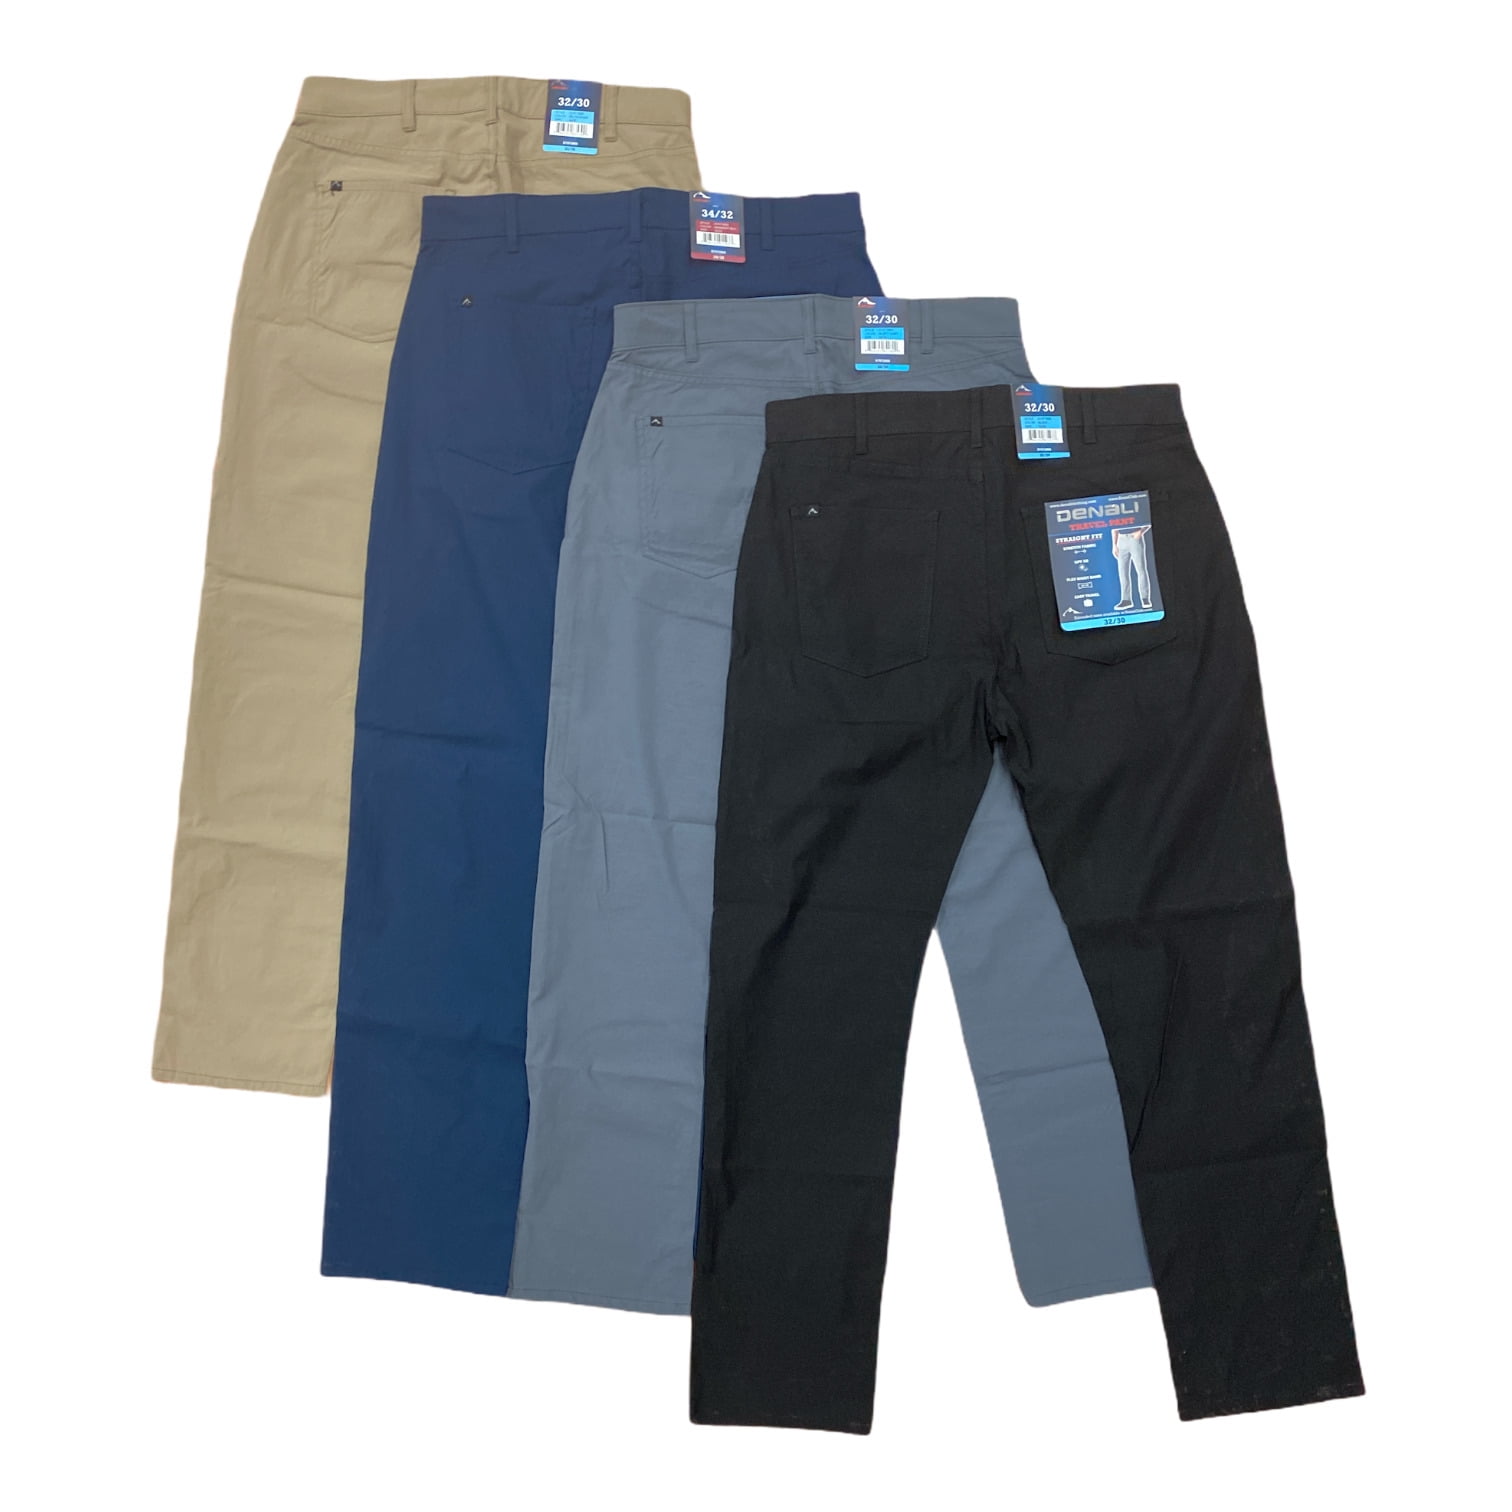 Denali Men's Flex Waistband Travel Pant, Straight Fit (Dusty Grey, 32/30) 